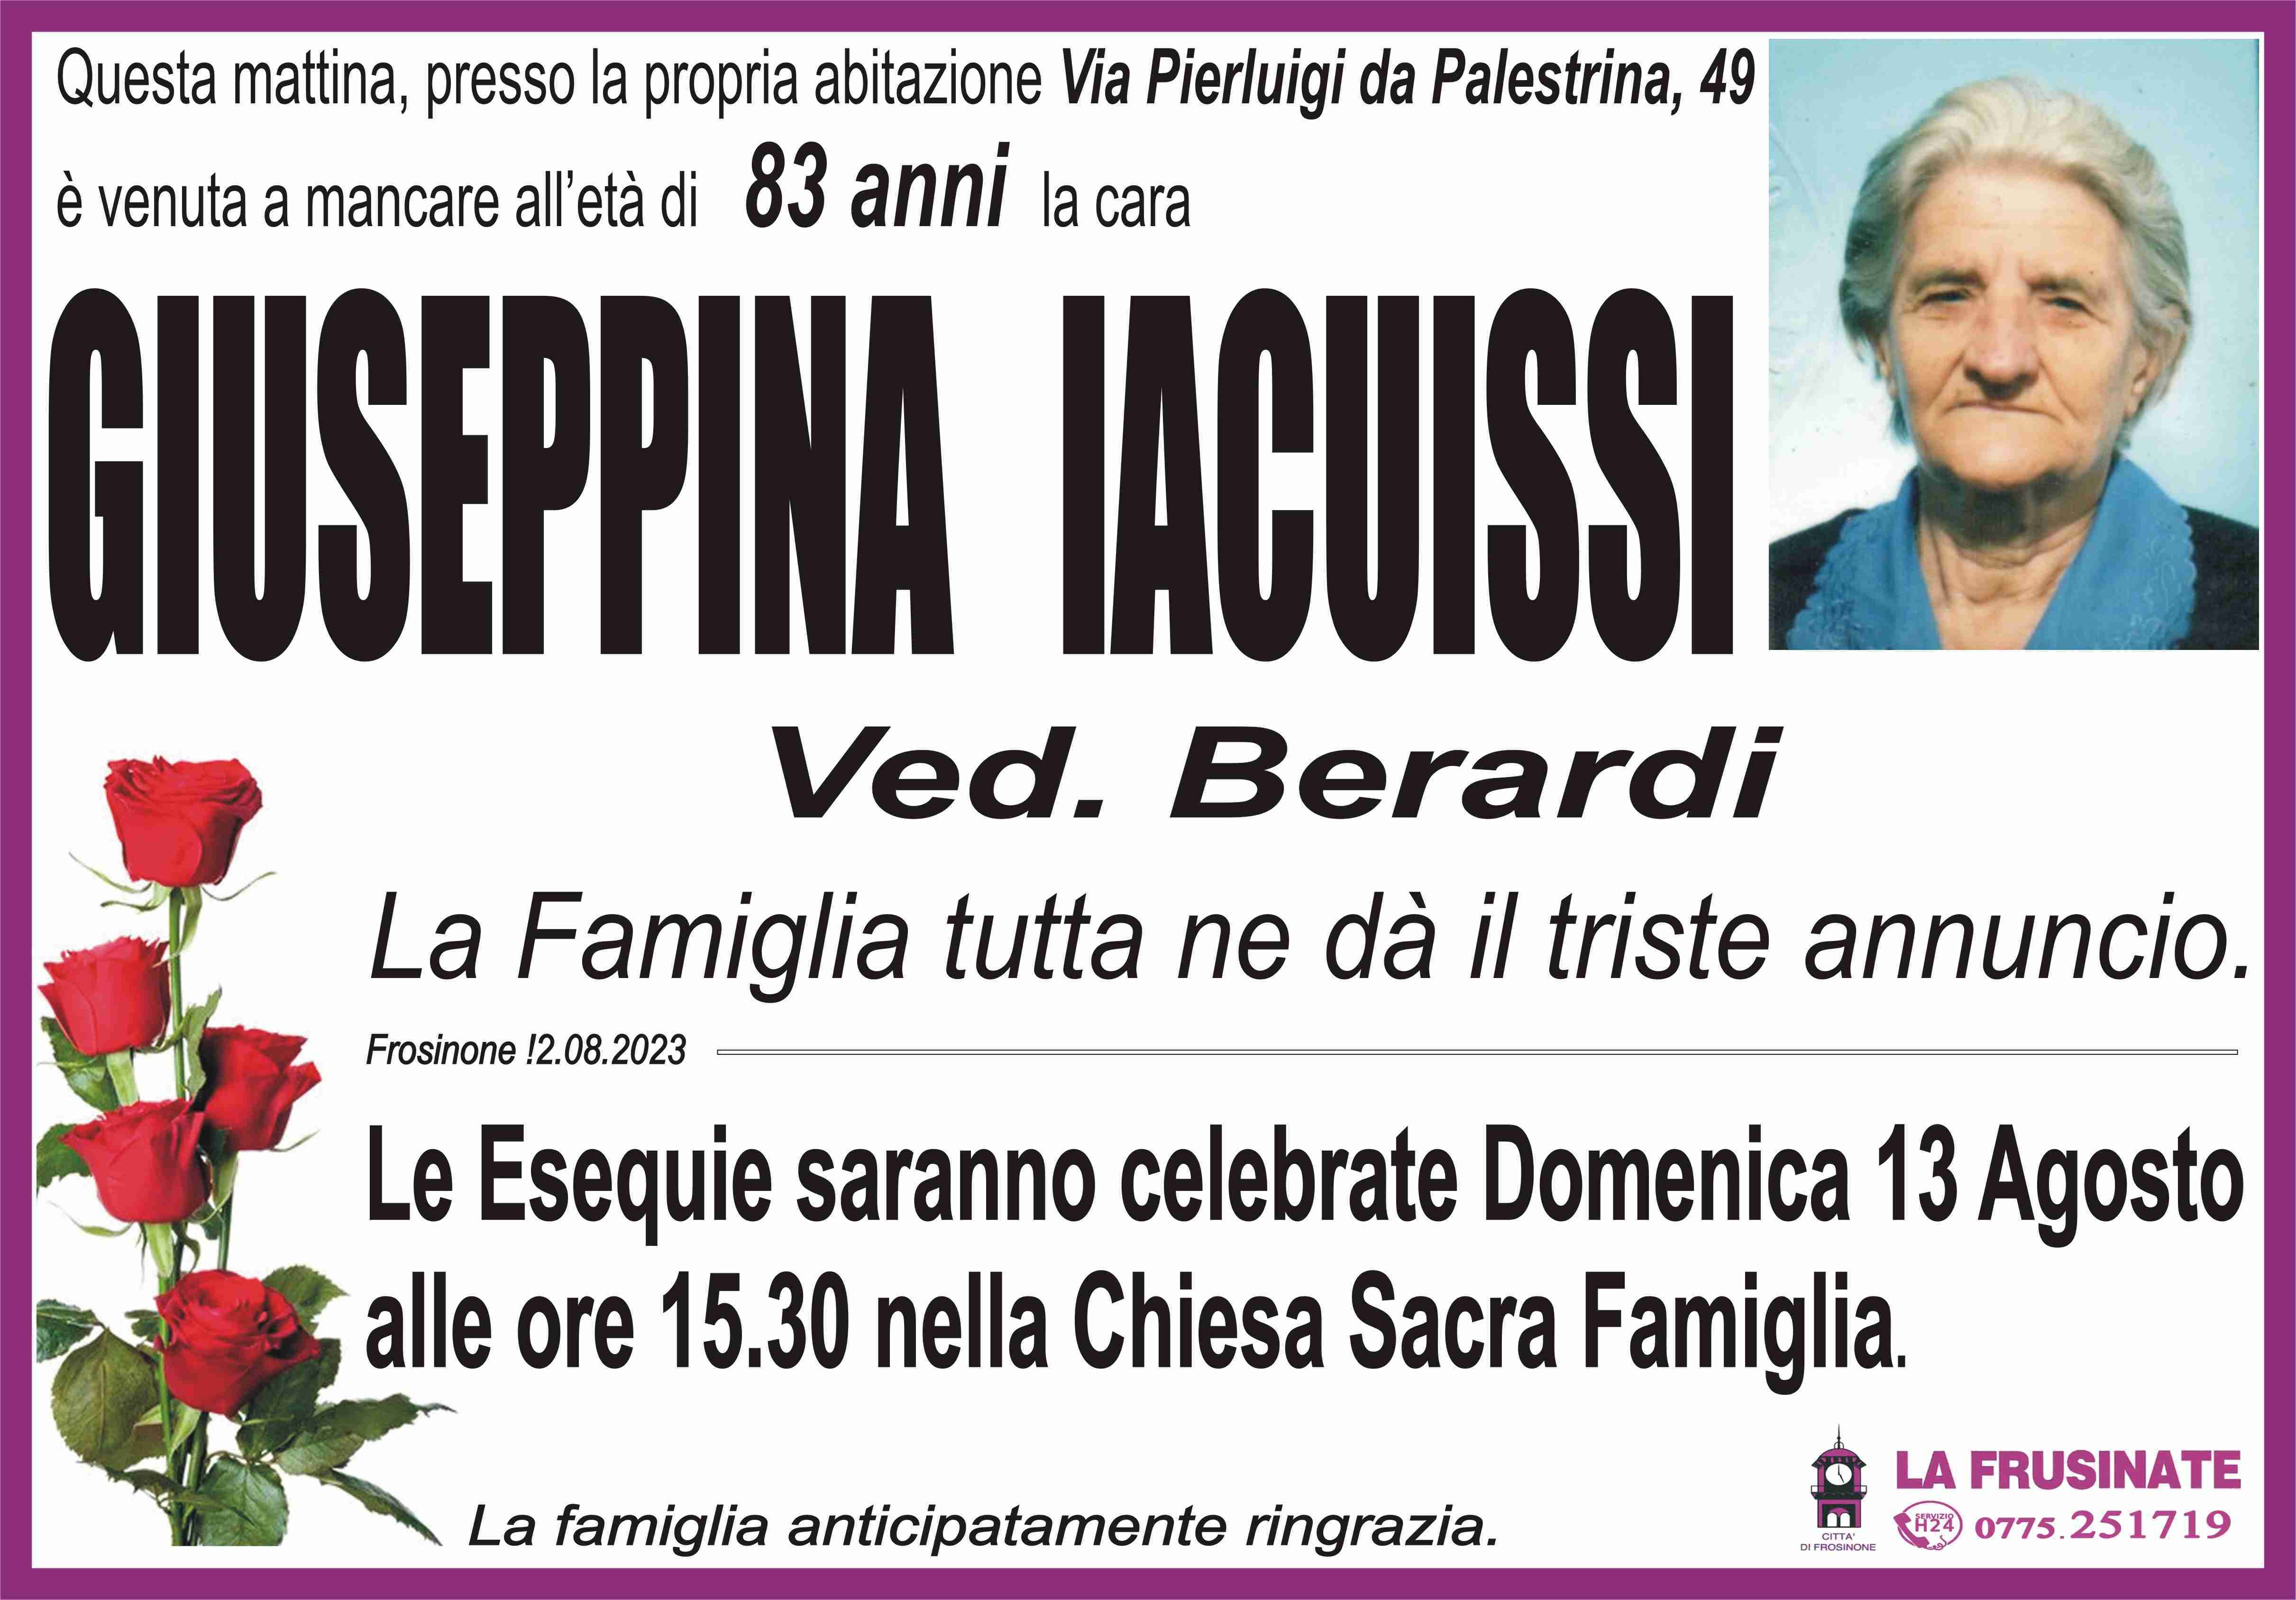 Giuseppina Iacuissi